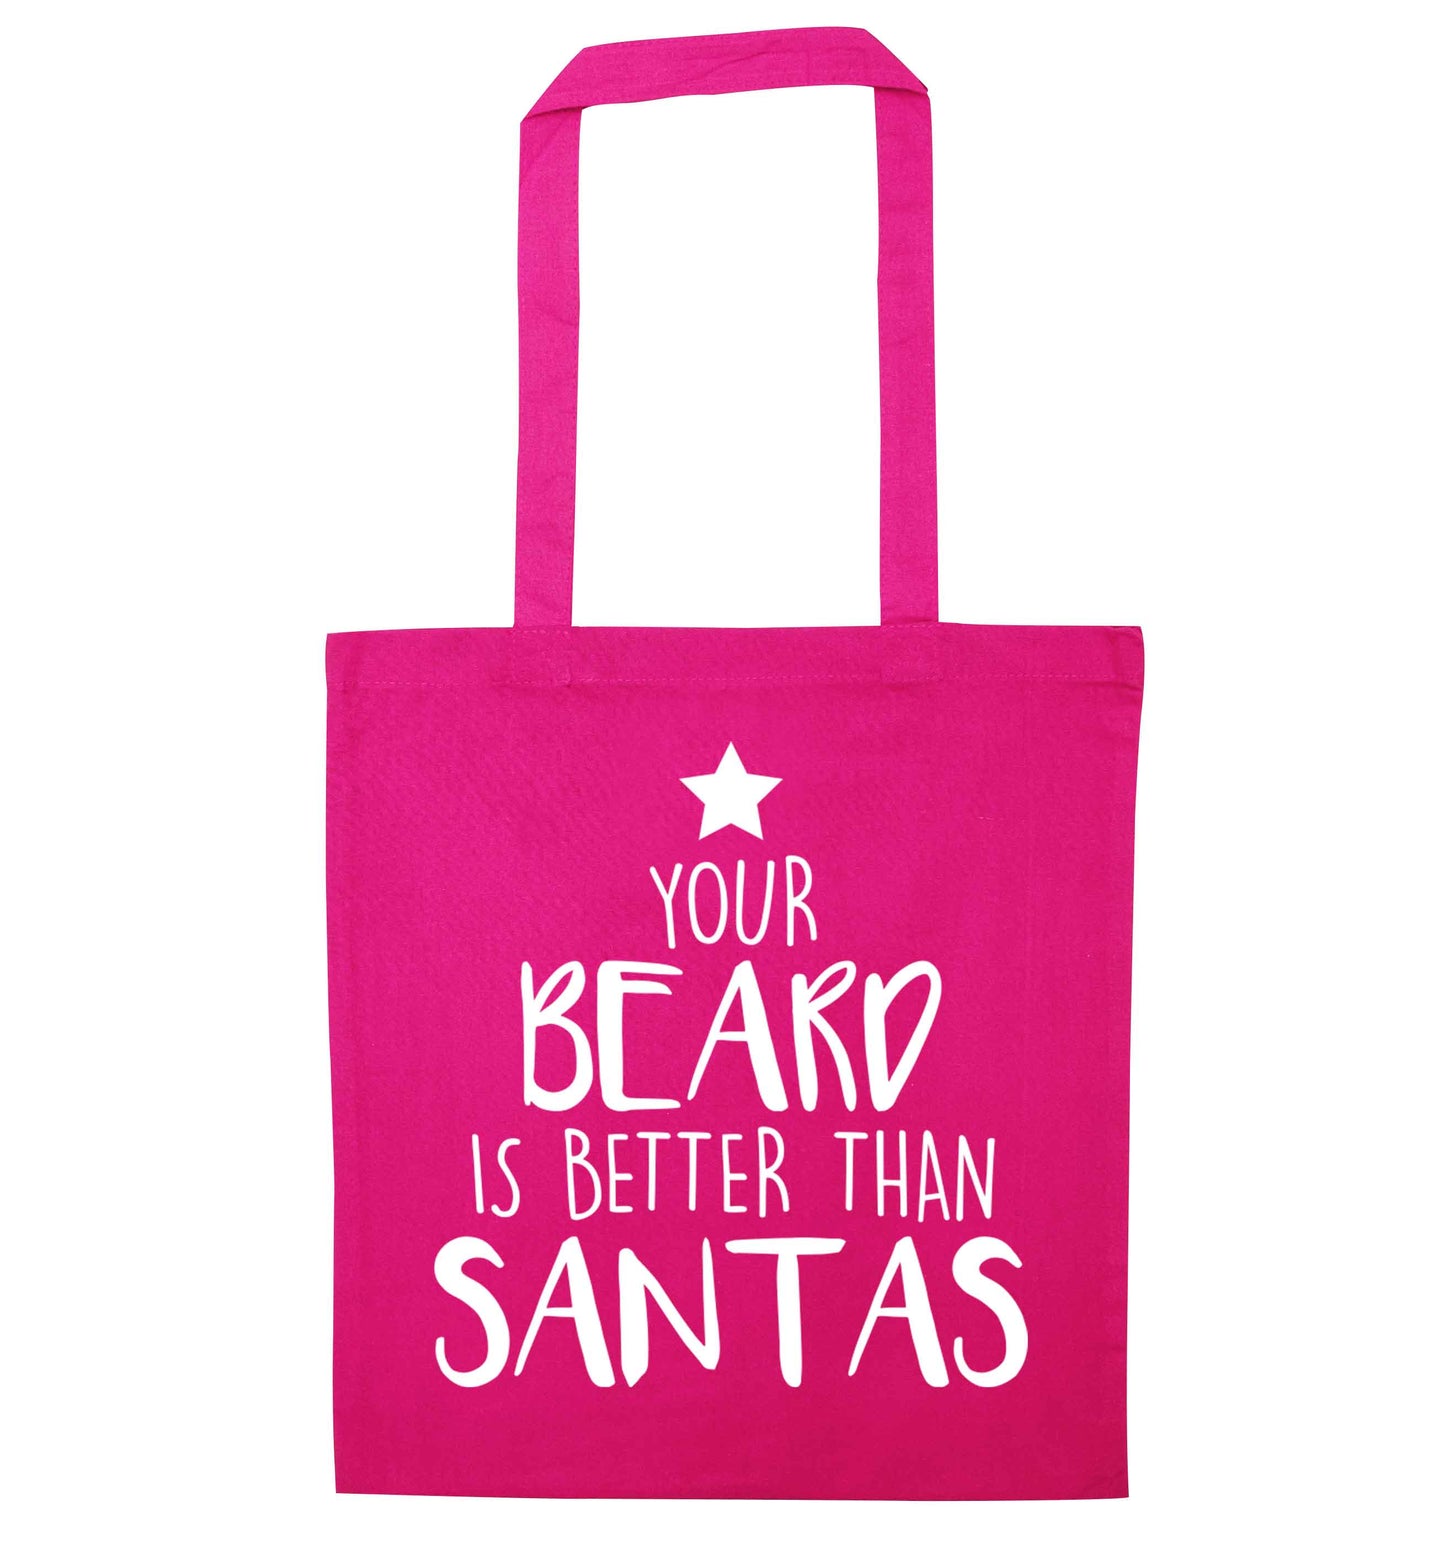 Your Beard Better than Santas pink tote bag